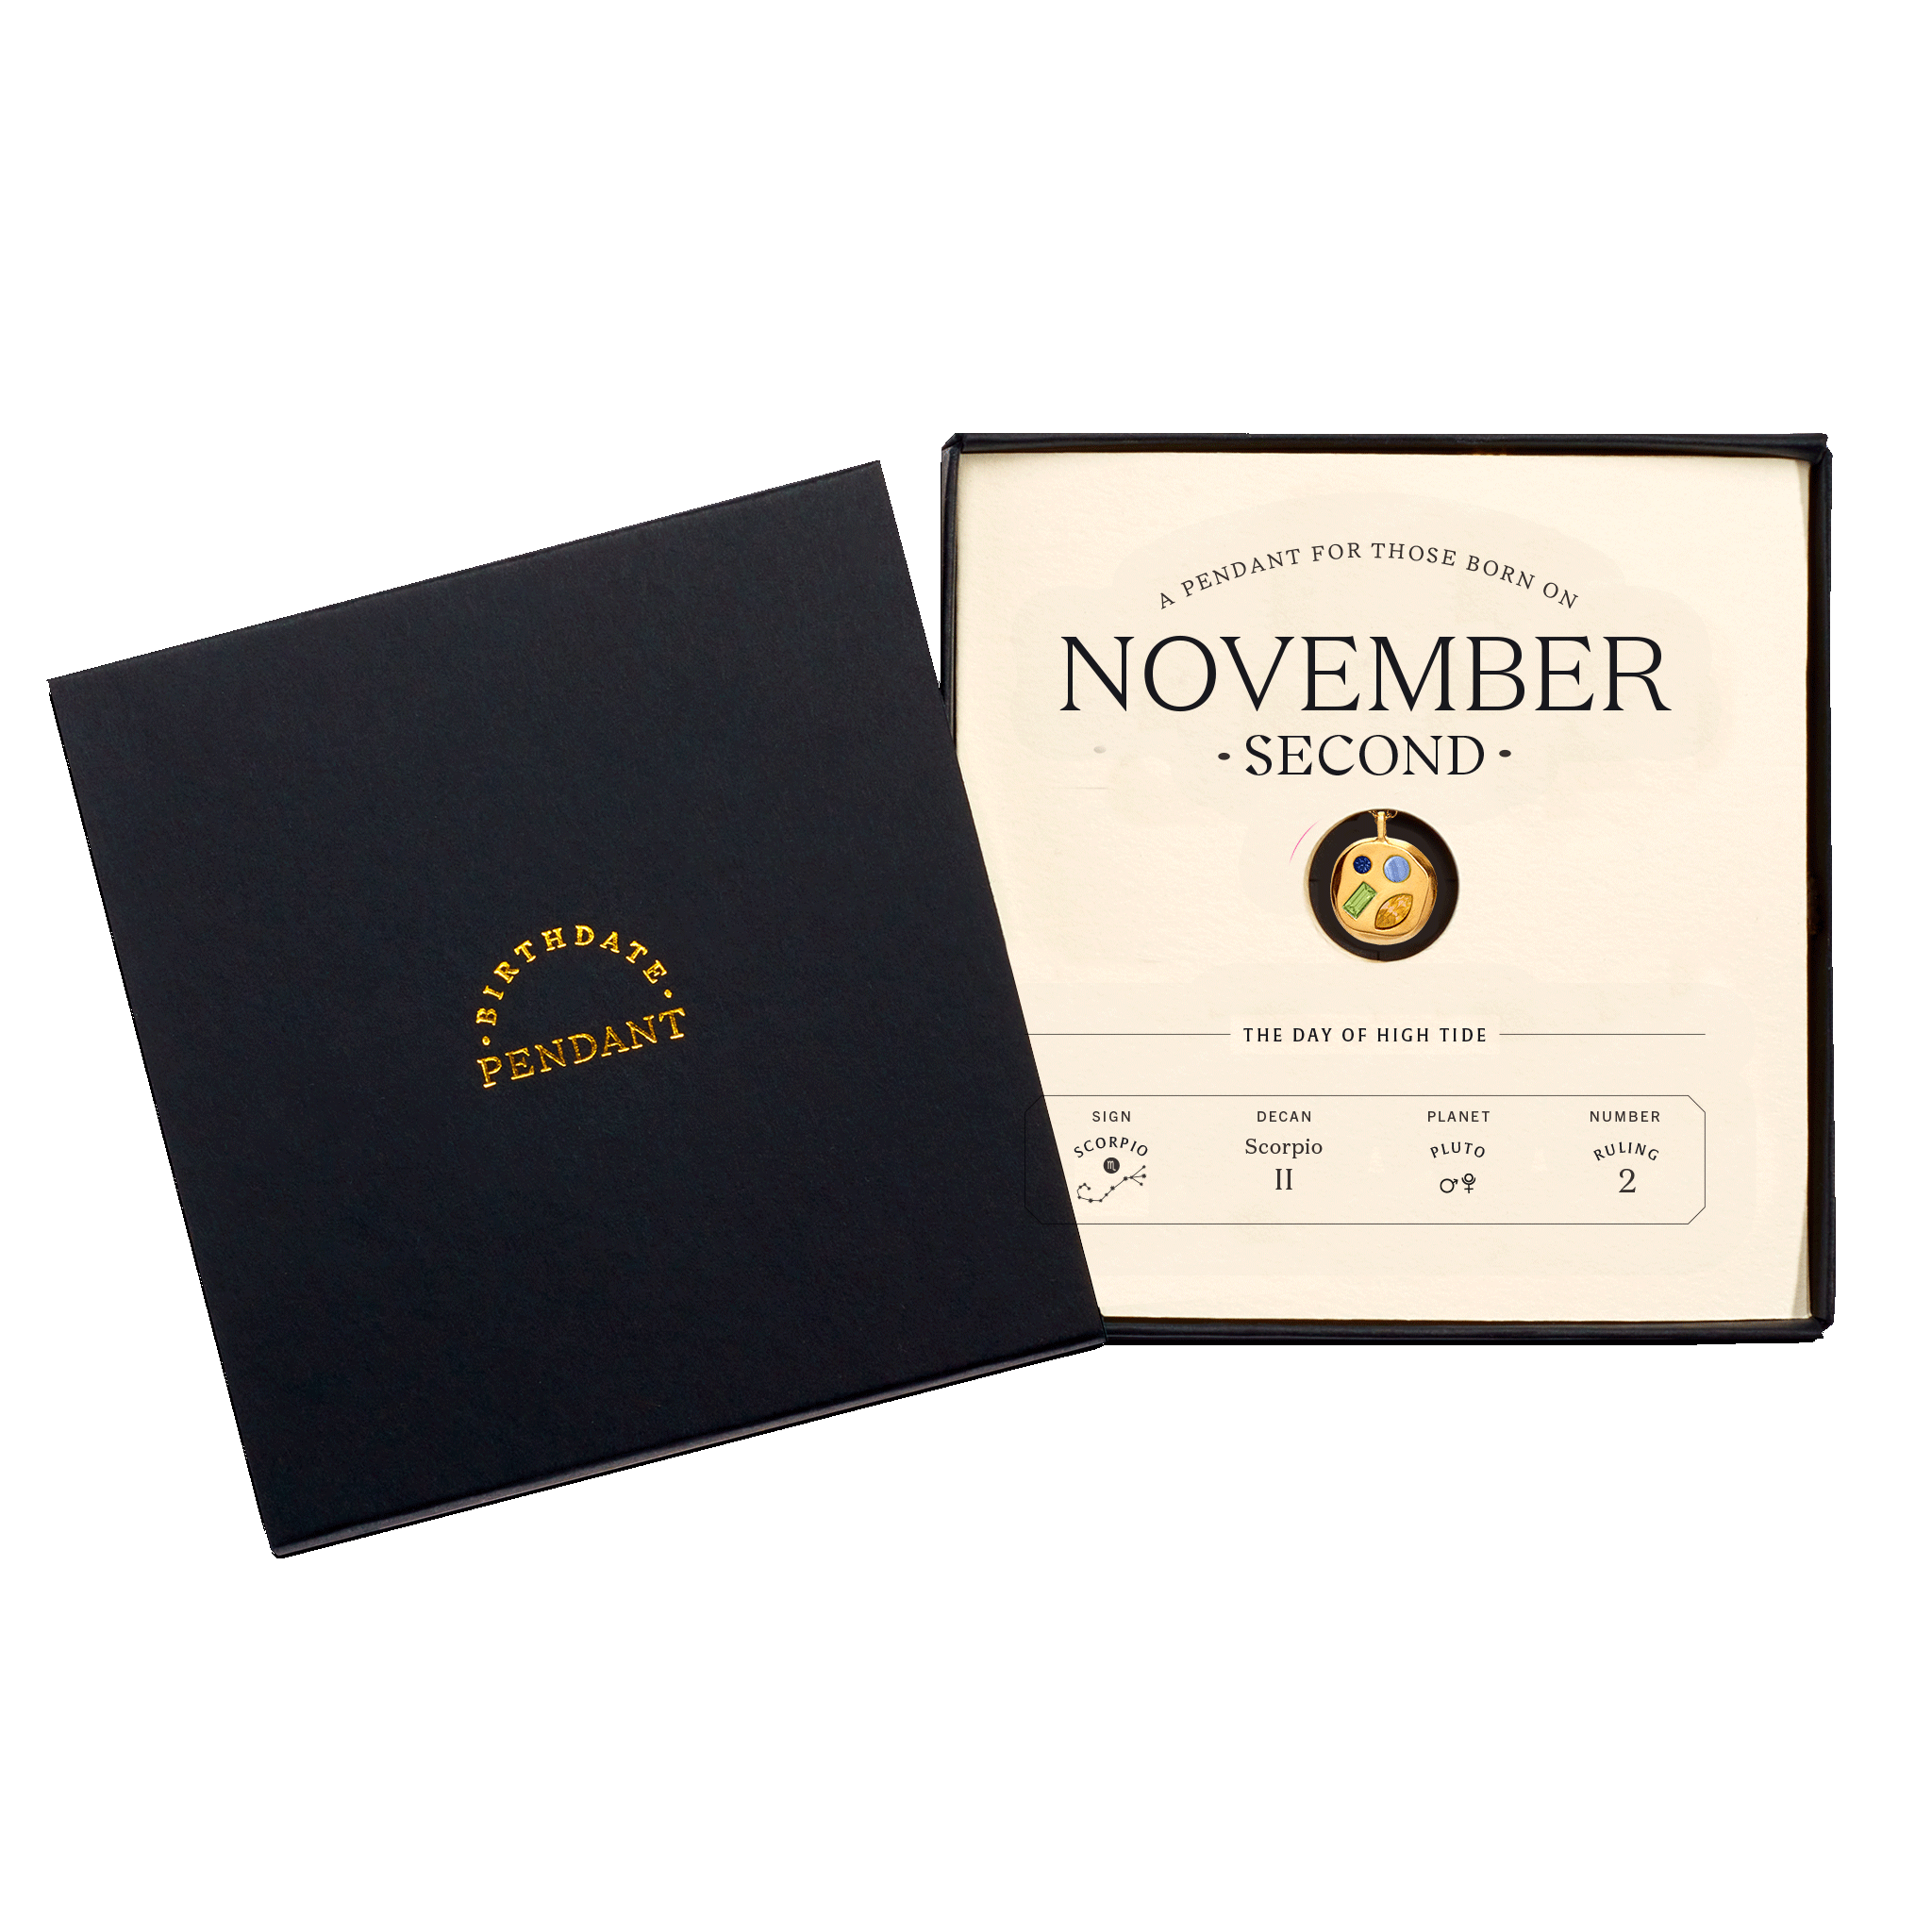 The November Second Pendant inside its box